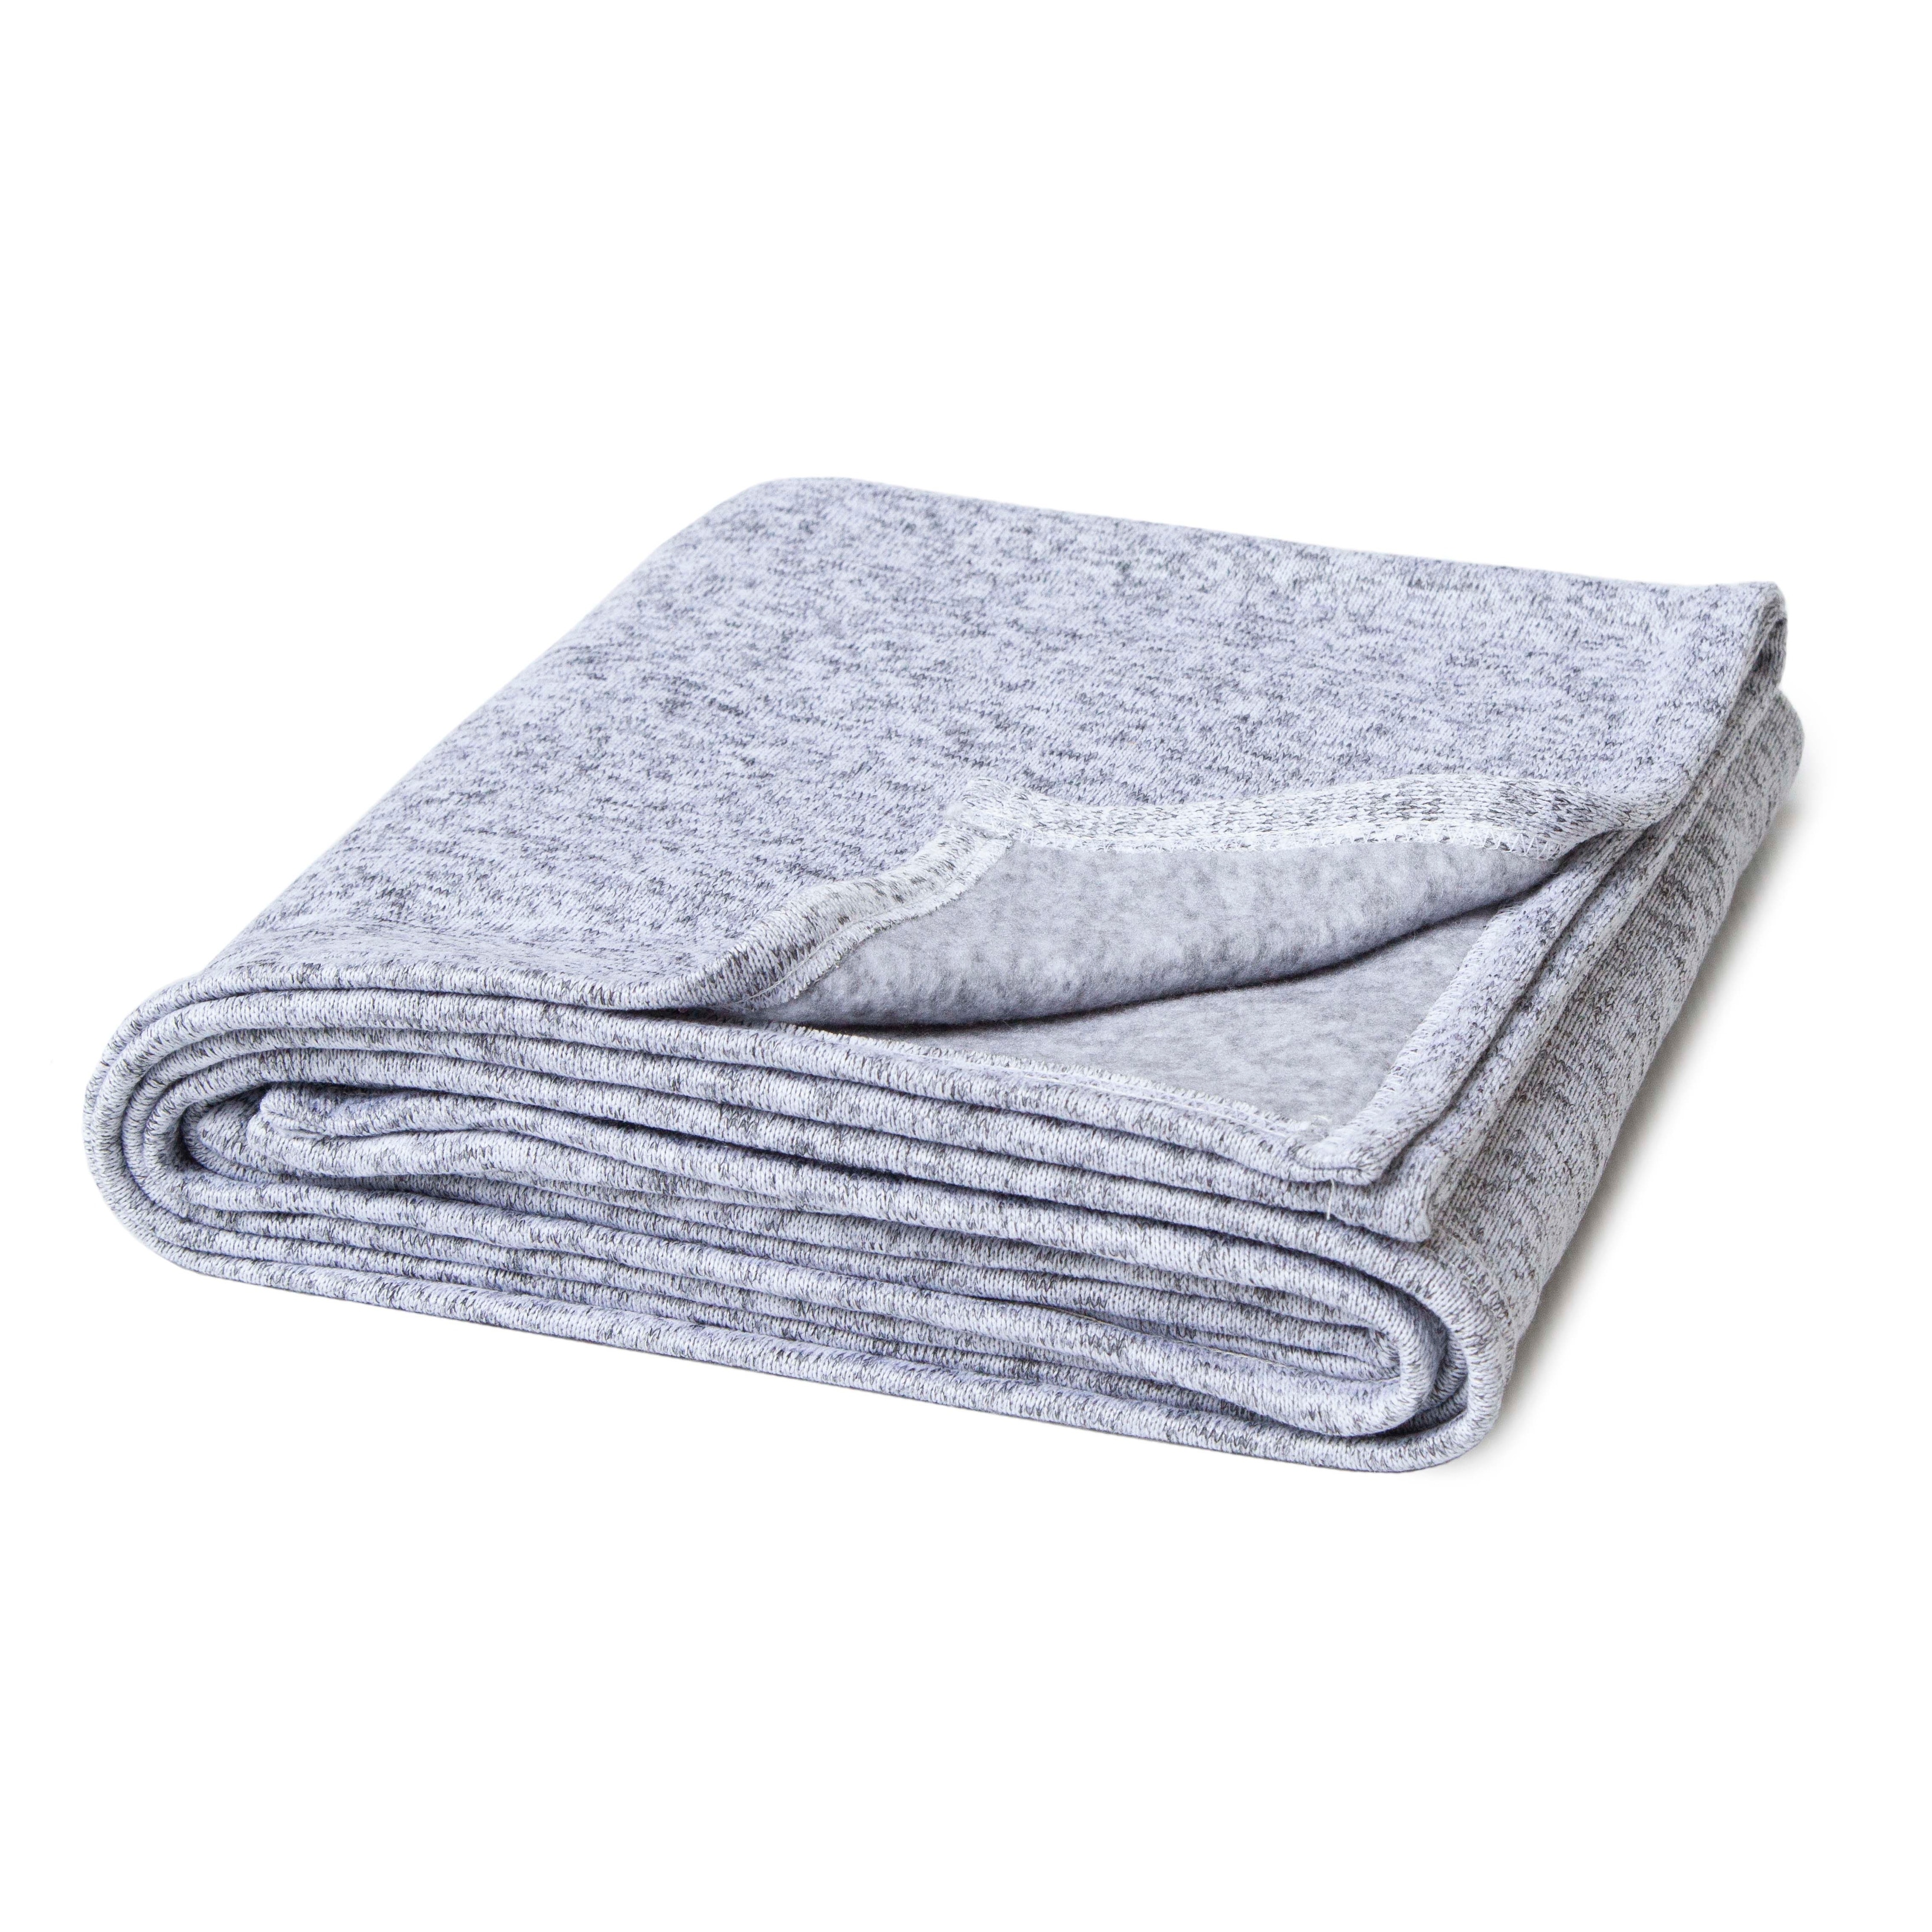 Double Sided Sweater Knit Brushed Fleece Blanket - Bed Bath